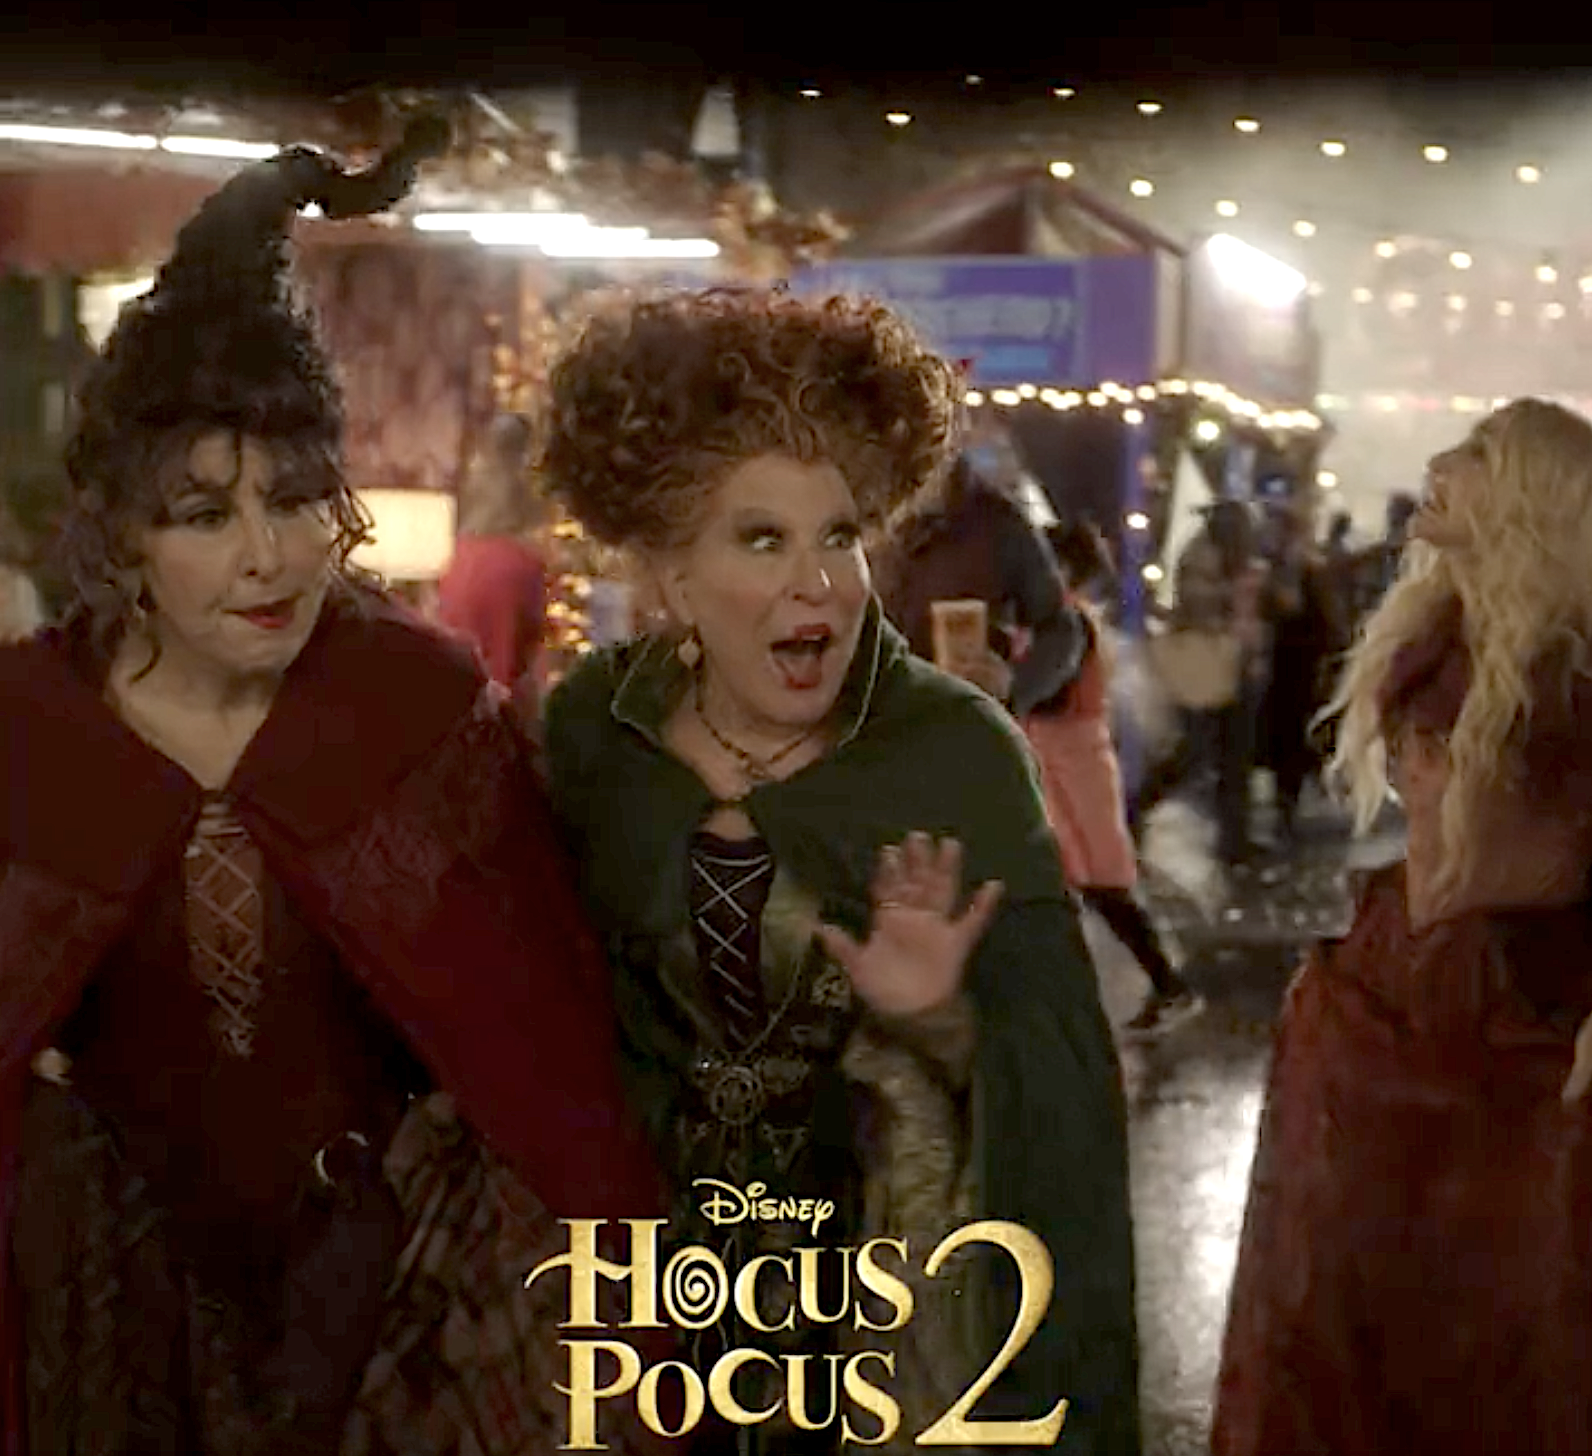 Hocus Pocus 2 footage revealed in Disney+ 2022 teaser